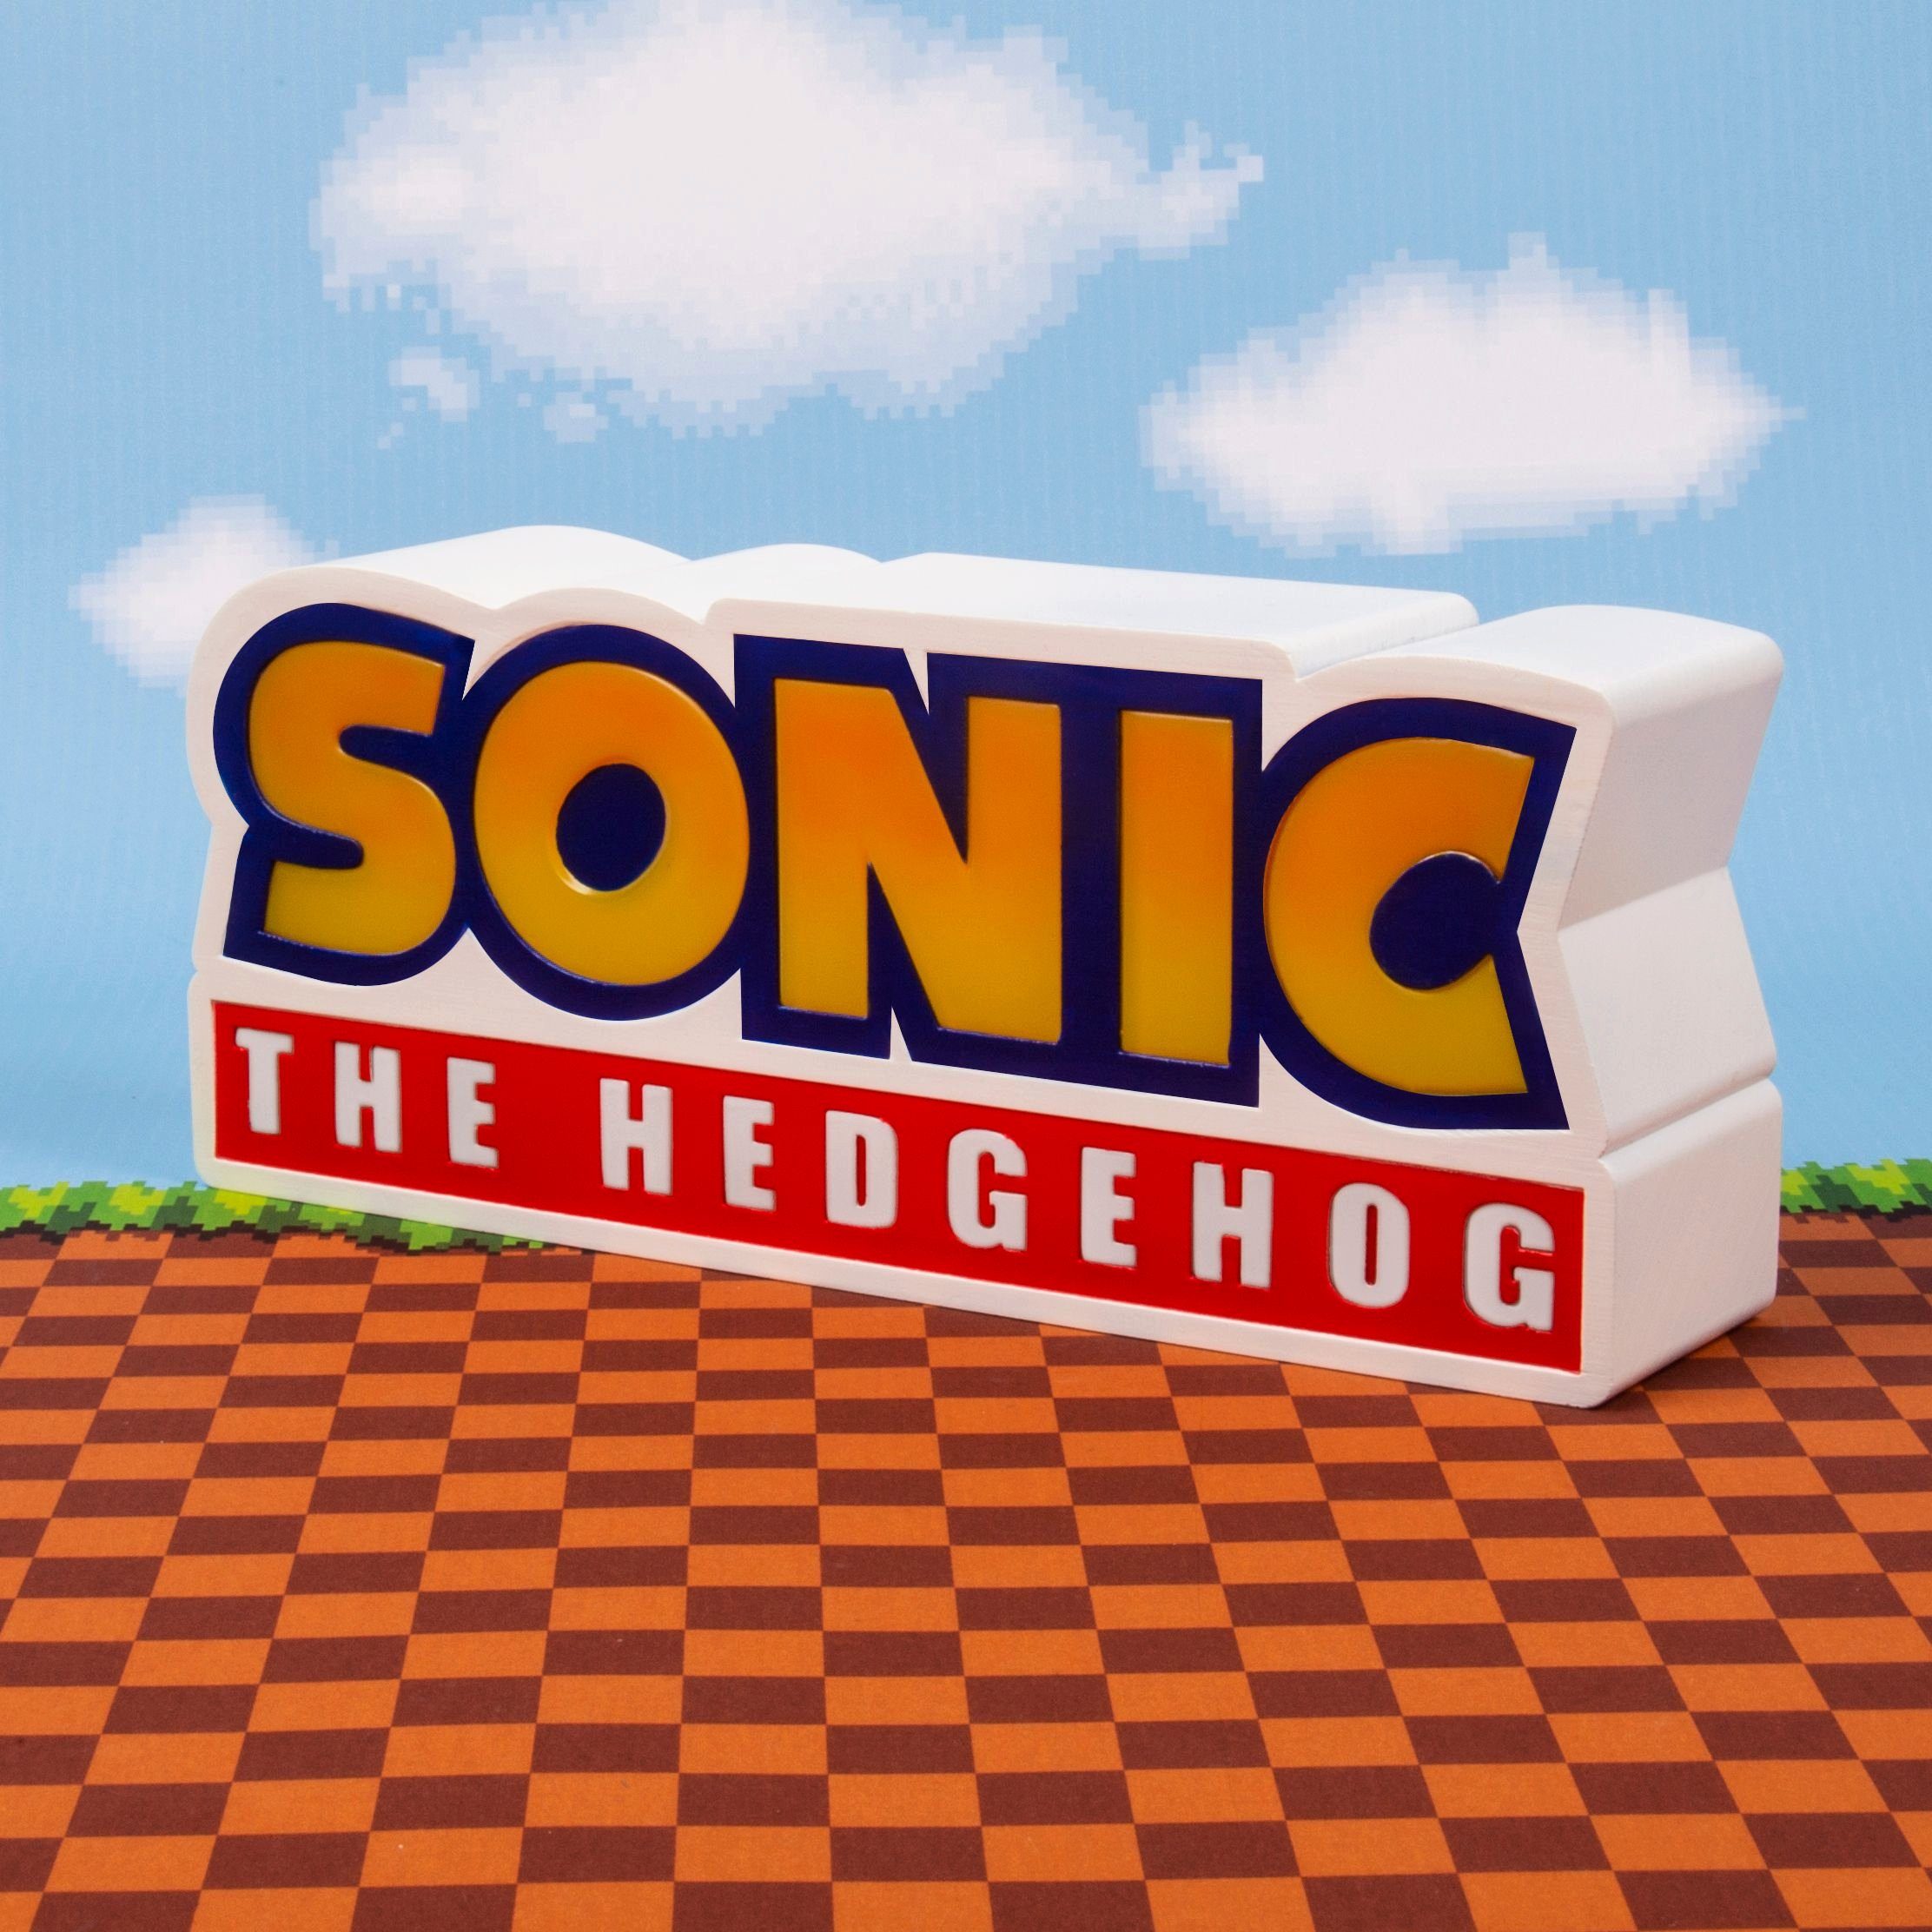 Lizenziertes Hedgehog Nachtlicht Fizz integriert, Offiziell creations Logo-Licht, Sonic Sonic Hedgehog-Merchandise LED The The fest